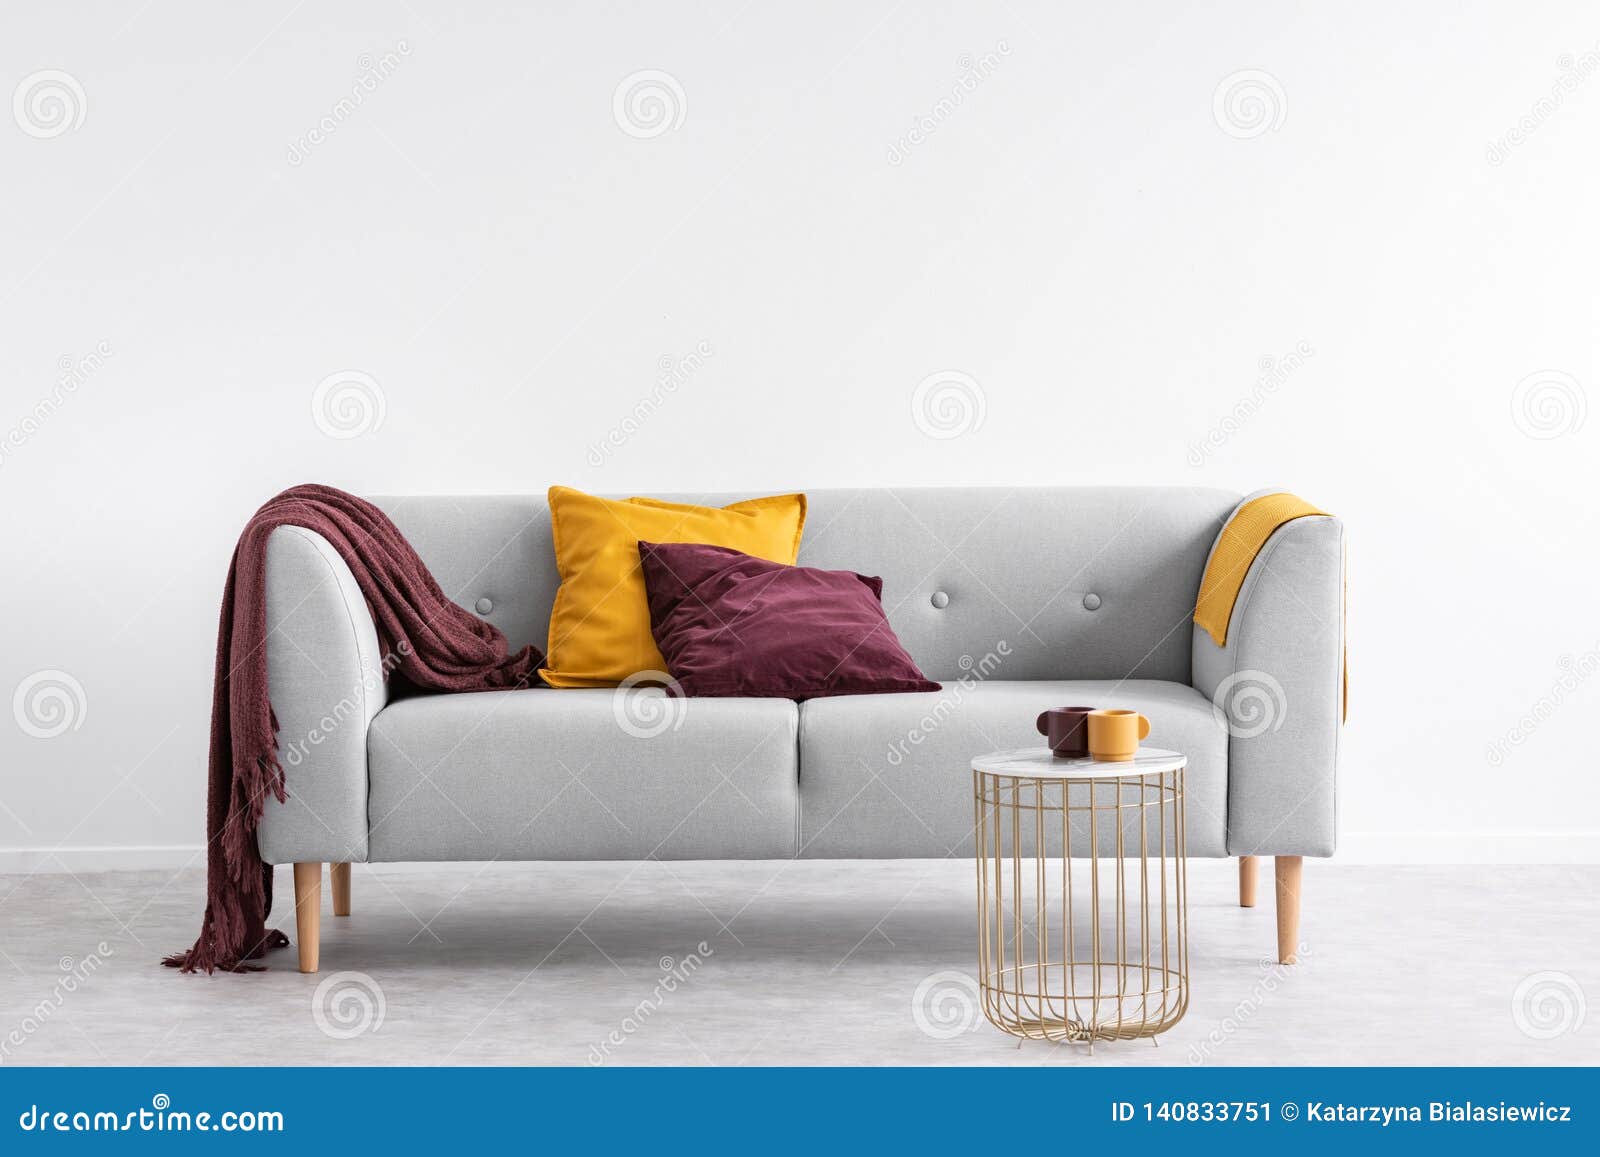 https://thumbs.dreamstime.com/z/pillows-purple-blanket-grey-sofa-white-living-room-interior-gold-table-real-photo-pillows-purple-blanket-140833751.jpg